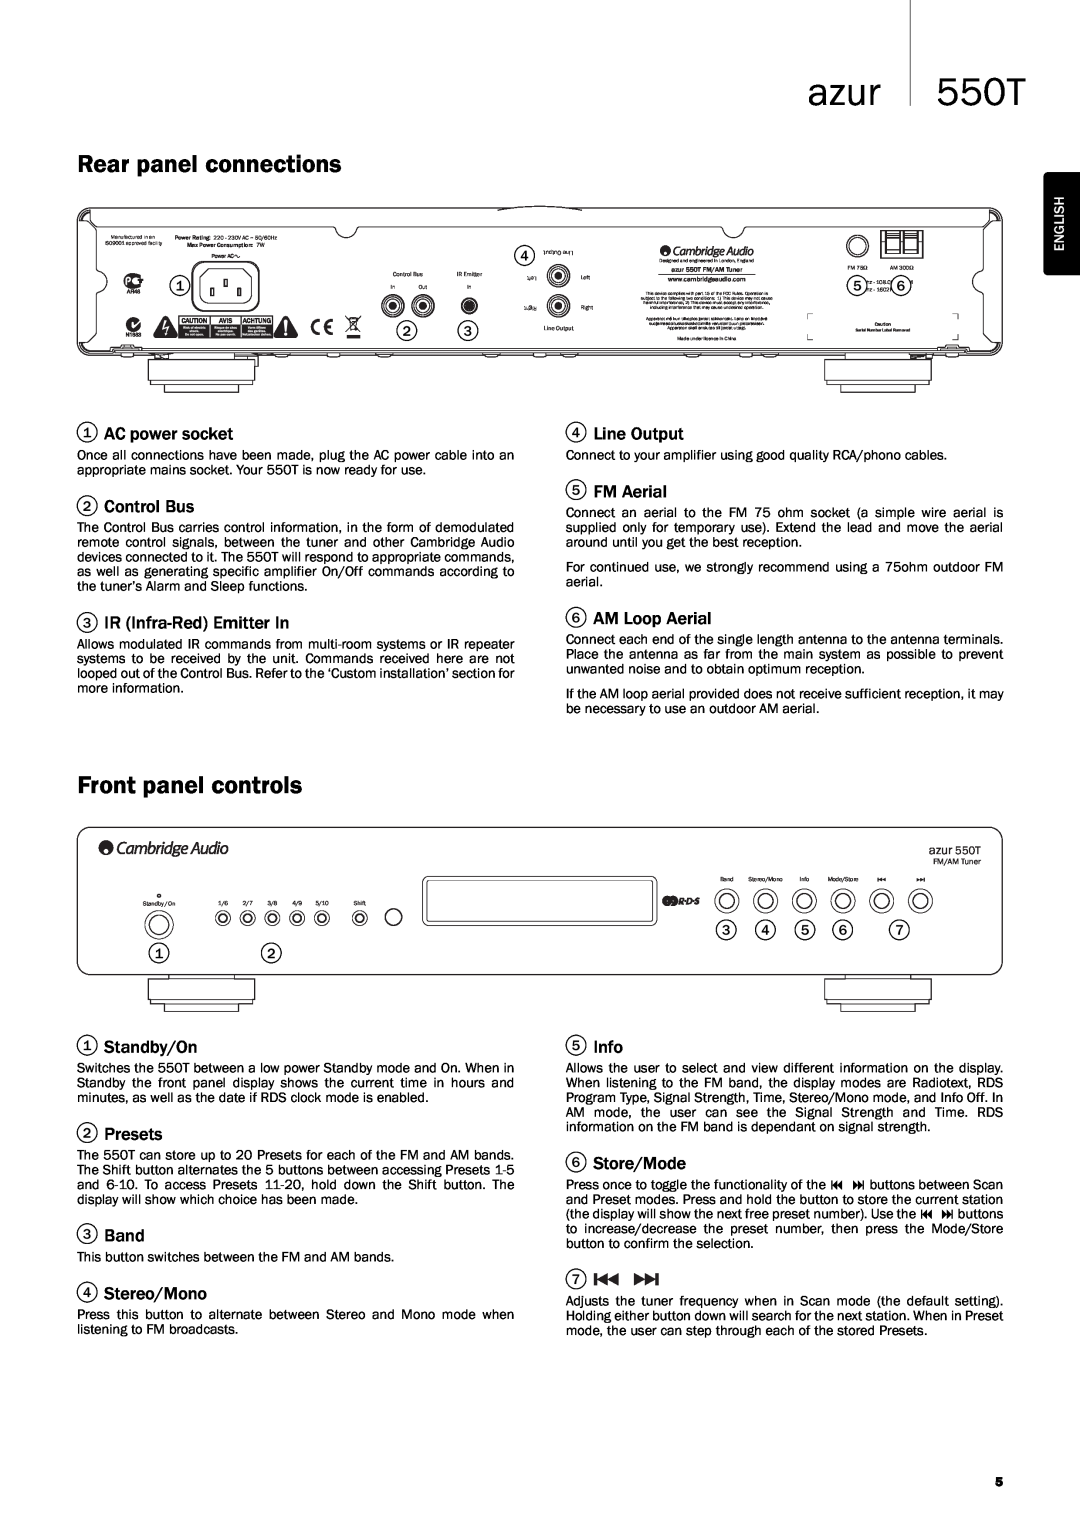 Cambridge Audio user manual Rear panel connections, Front panel controls, azur 550T 